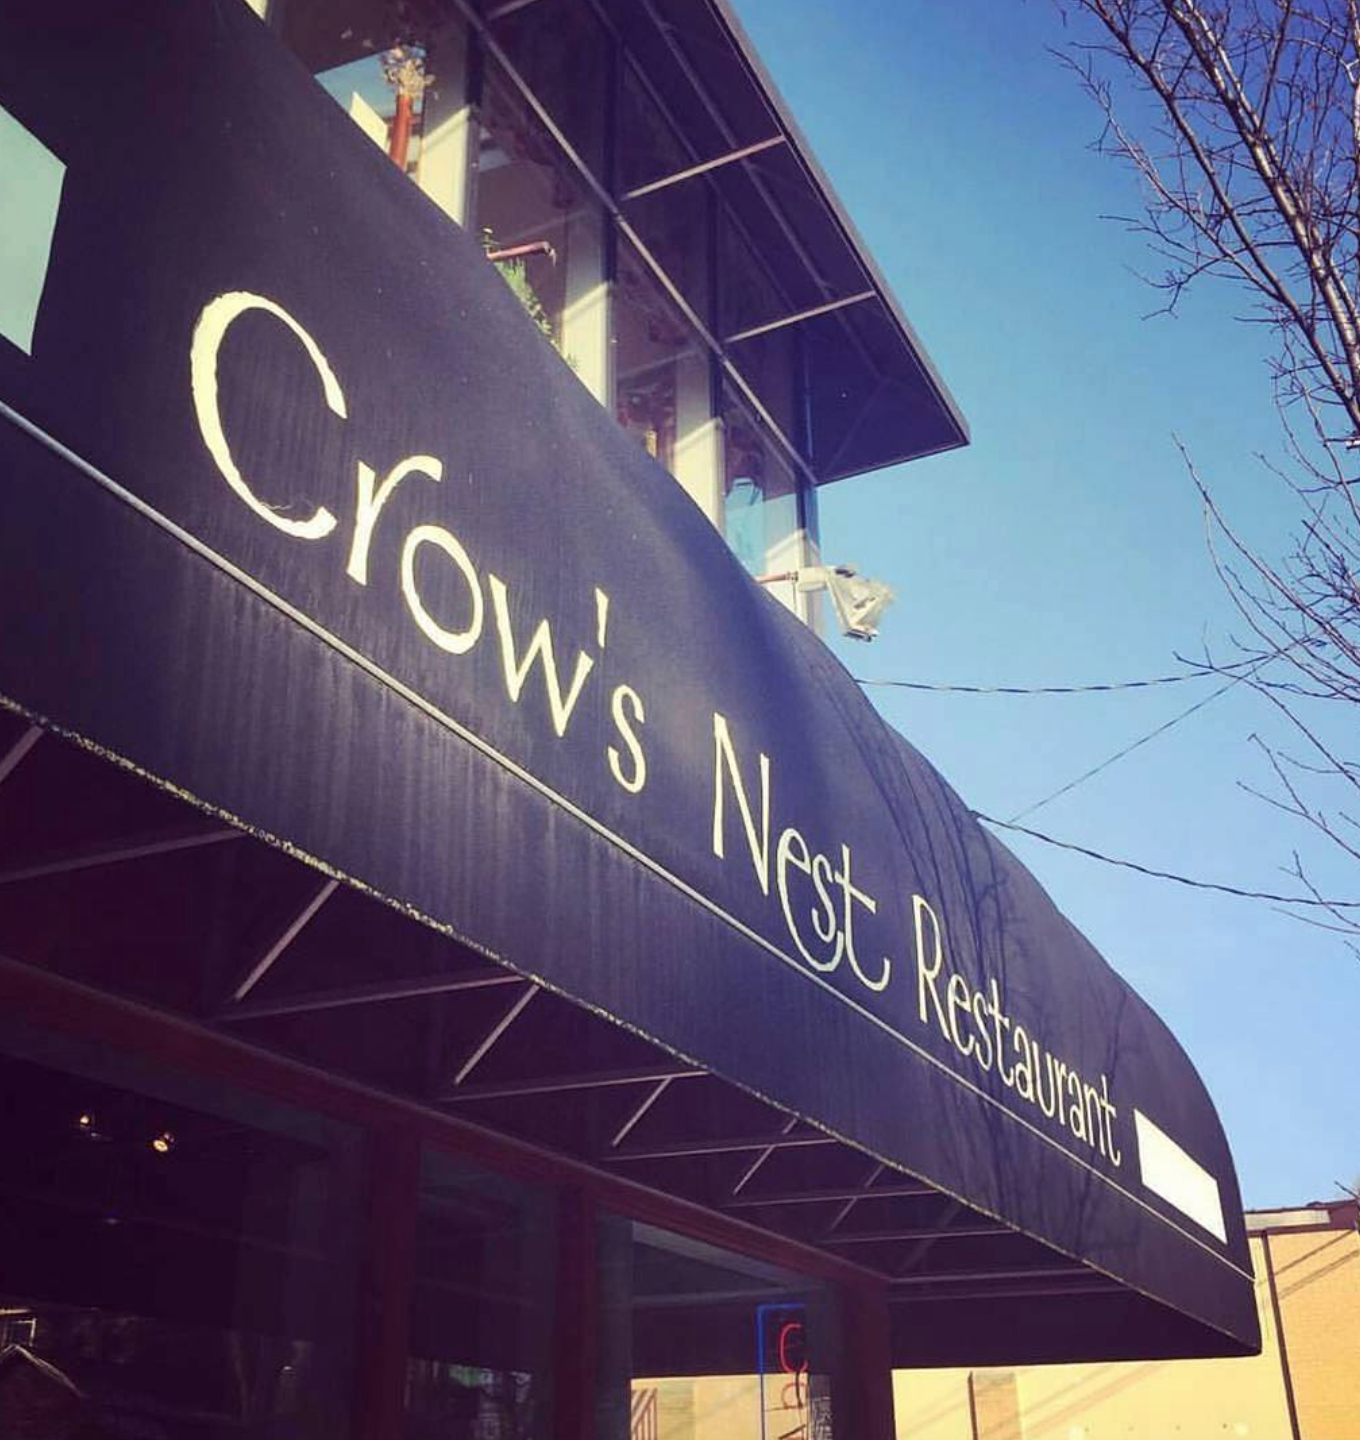 Crow's Nest Restaurant - Kalamazoo, Michigan